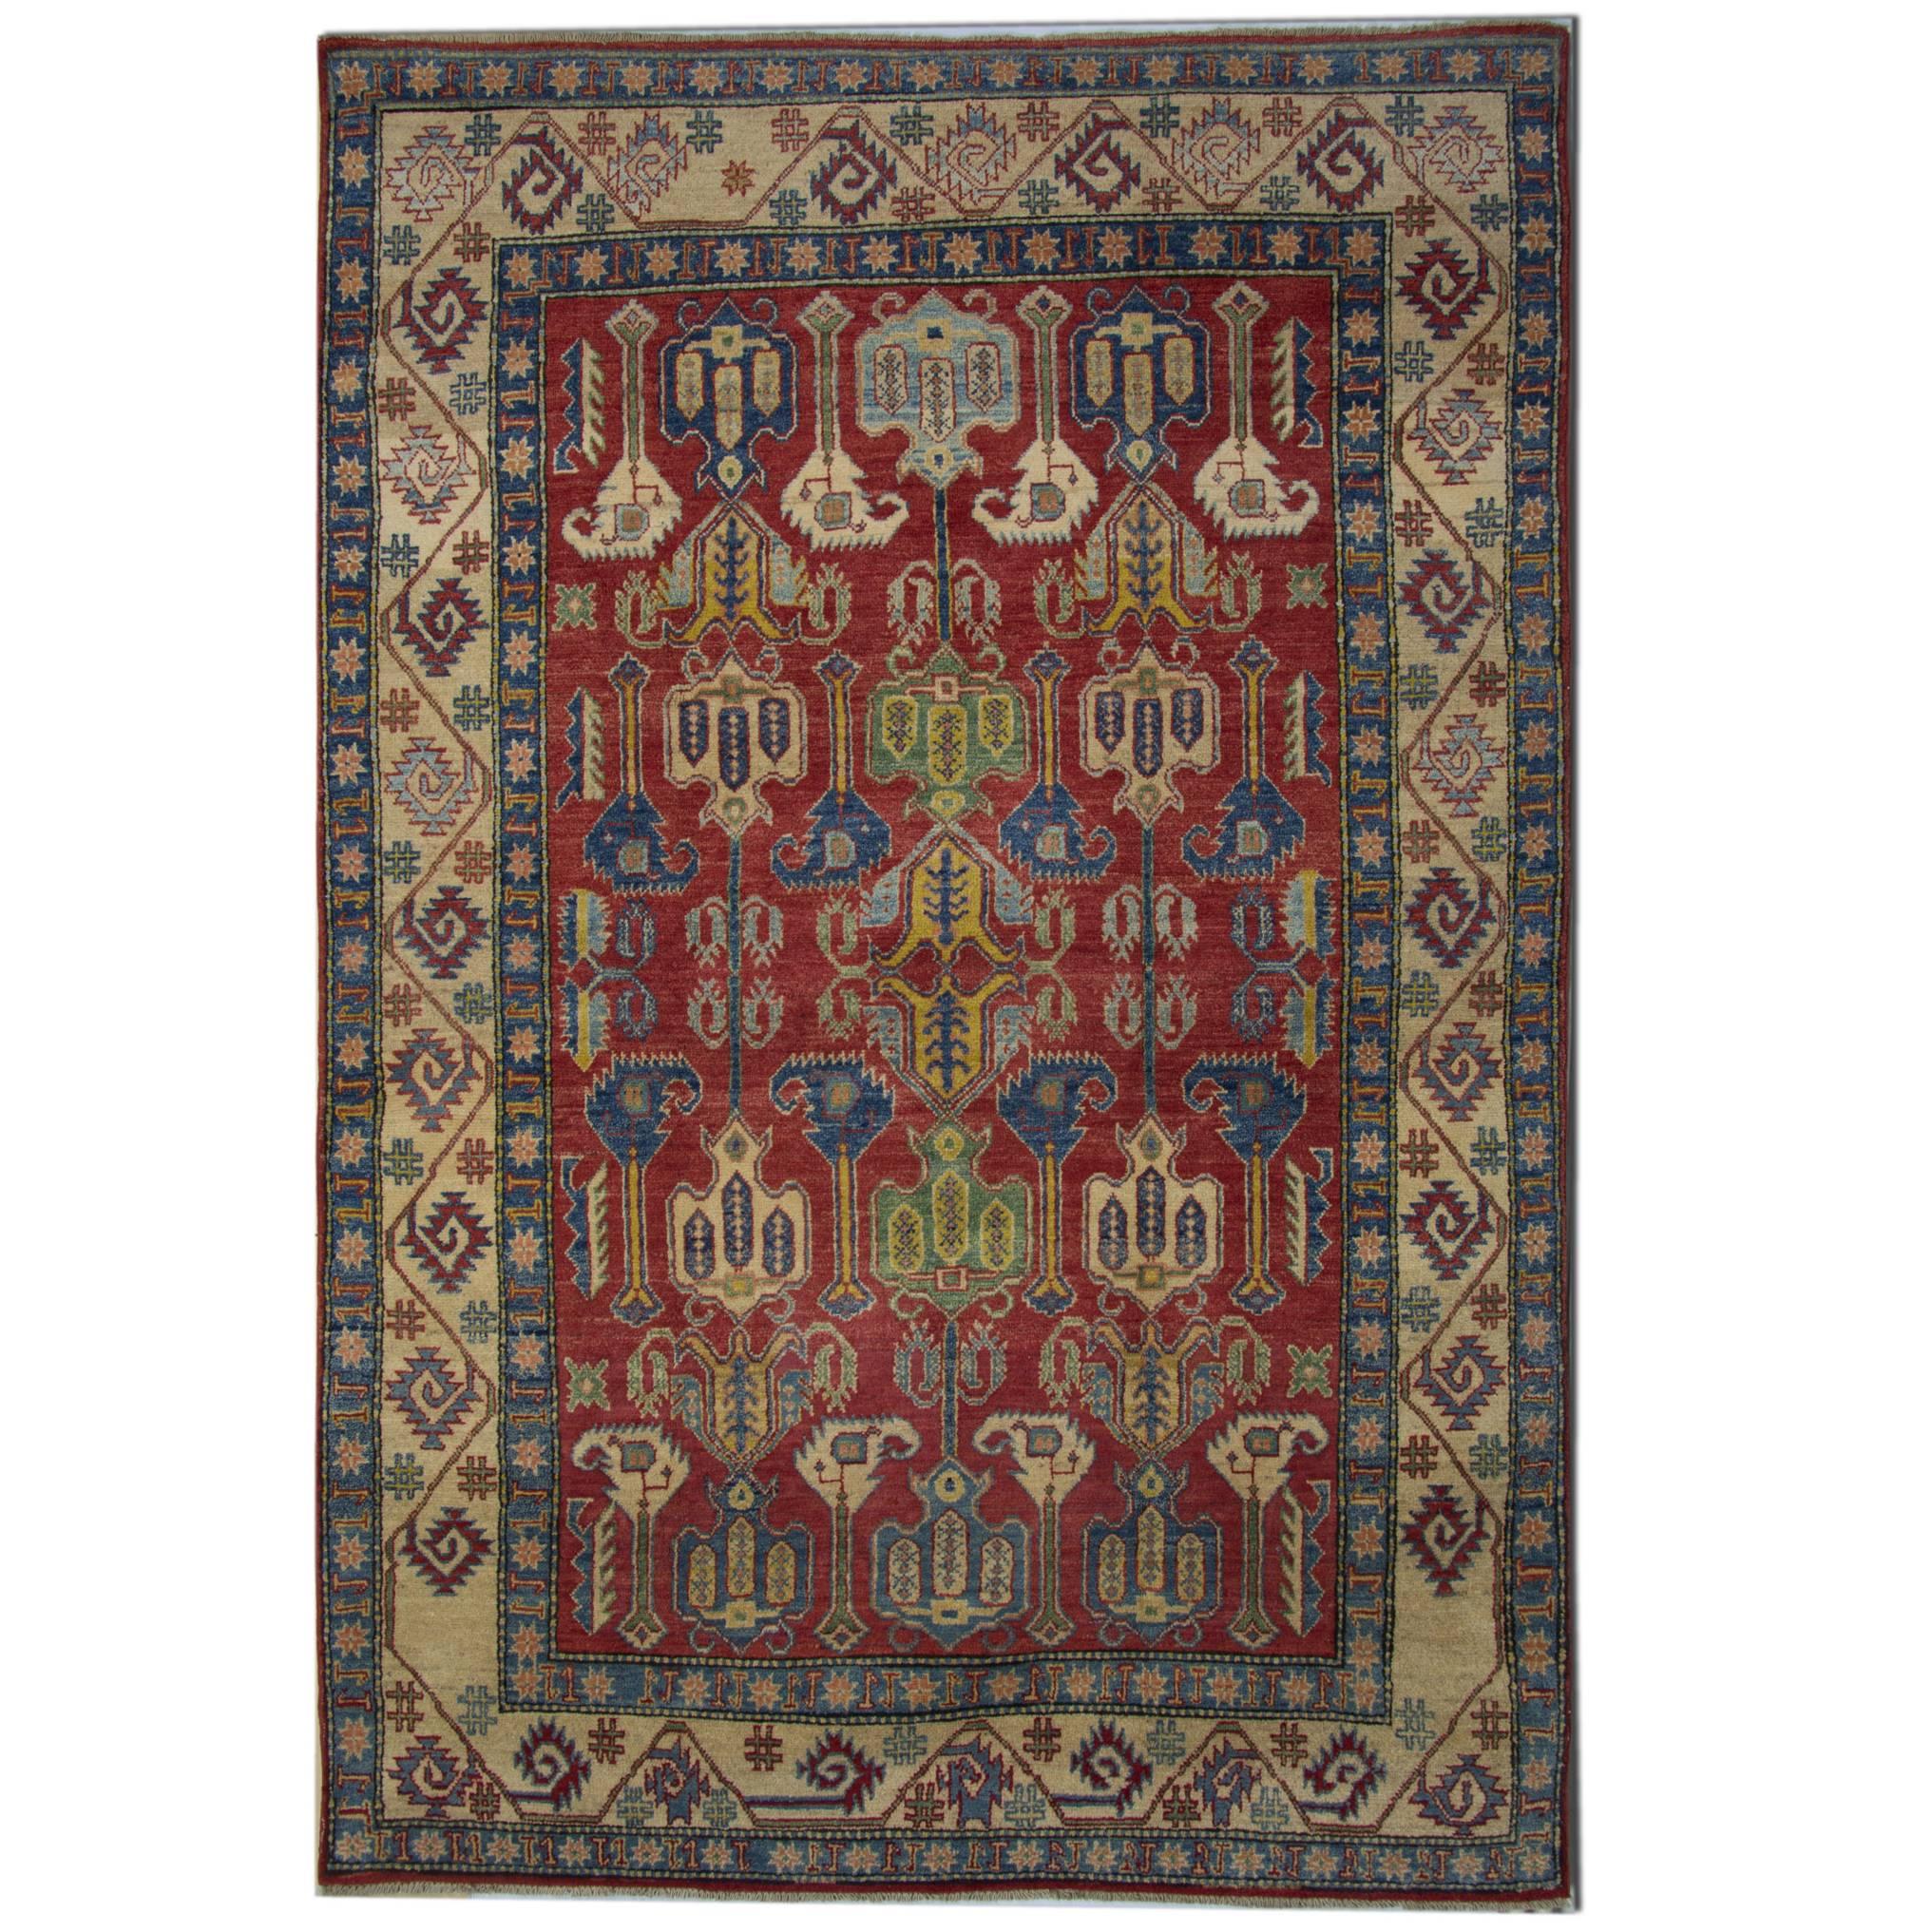 Handmade Carpet, Afghan Geometric Rugs, Kazak Livingroom Rugs 185x265cm 